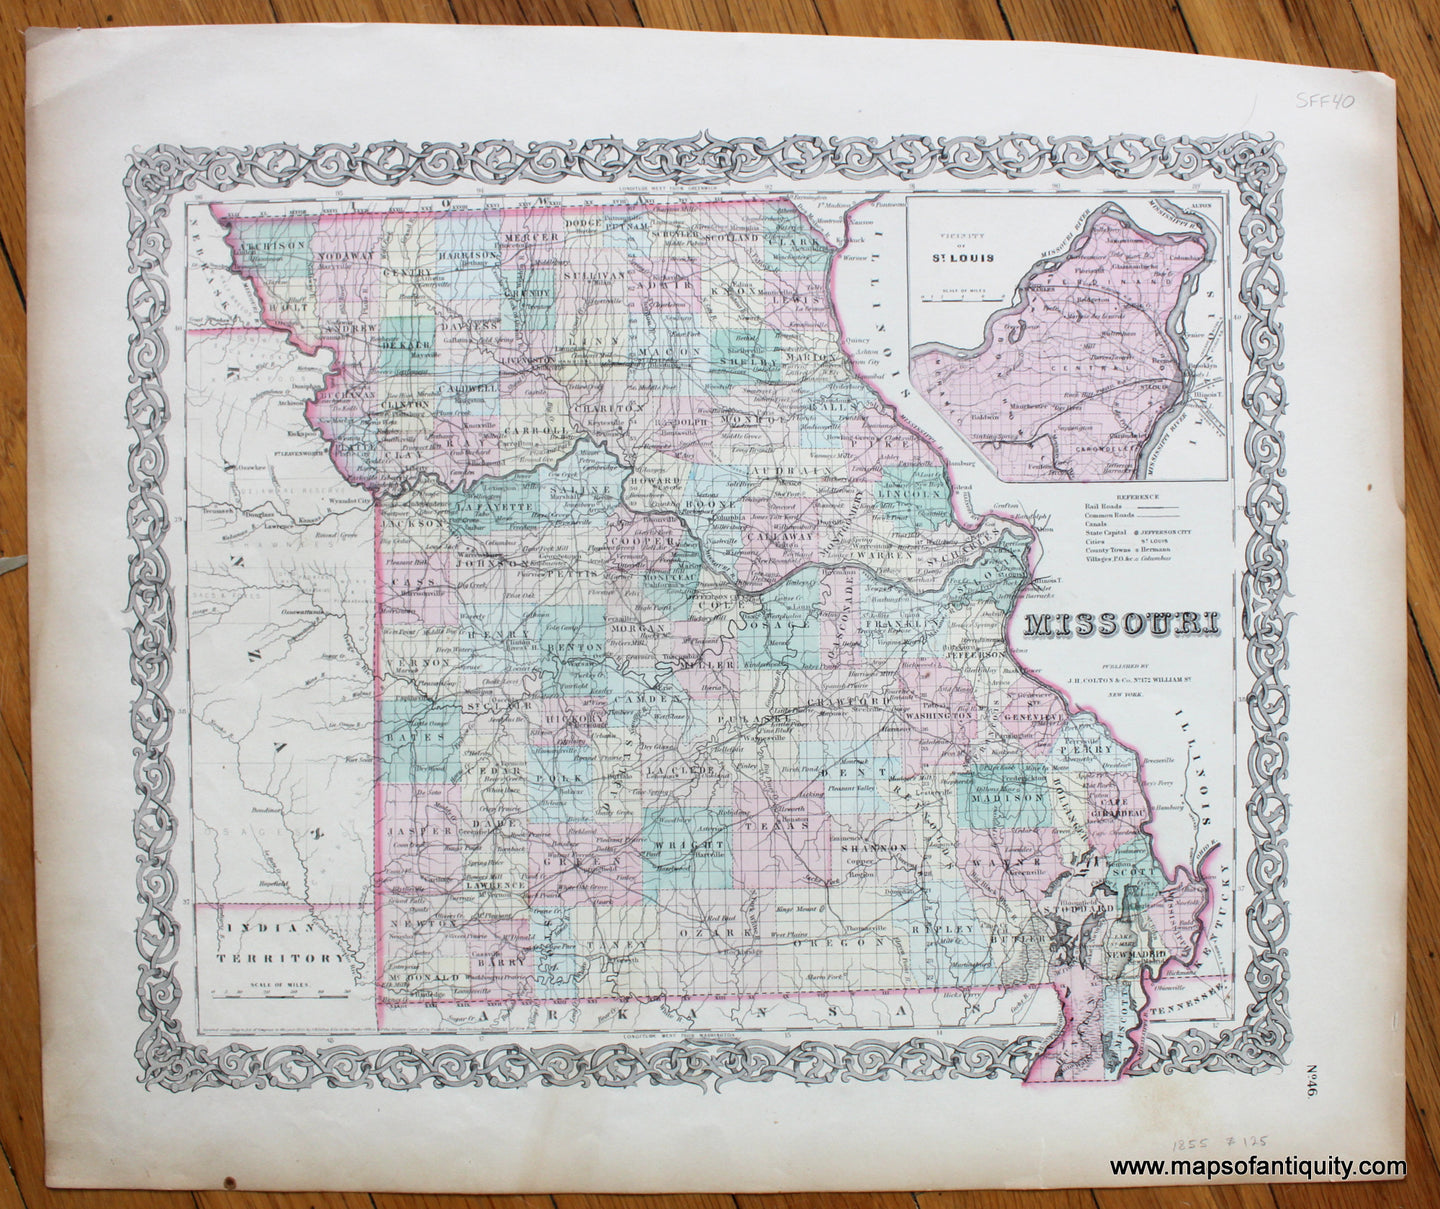 Antique-Hand-Colored-Map-Missouri-**********-United-States-Missouri-1855-Colton-Maps-Of-Antiquity